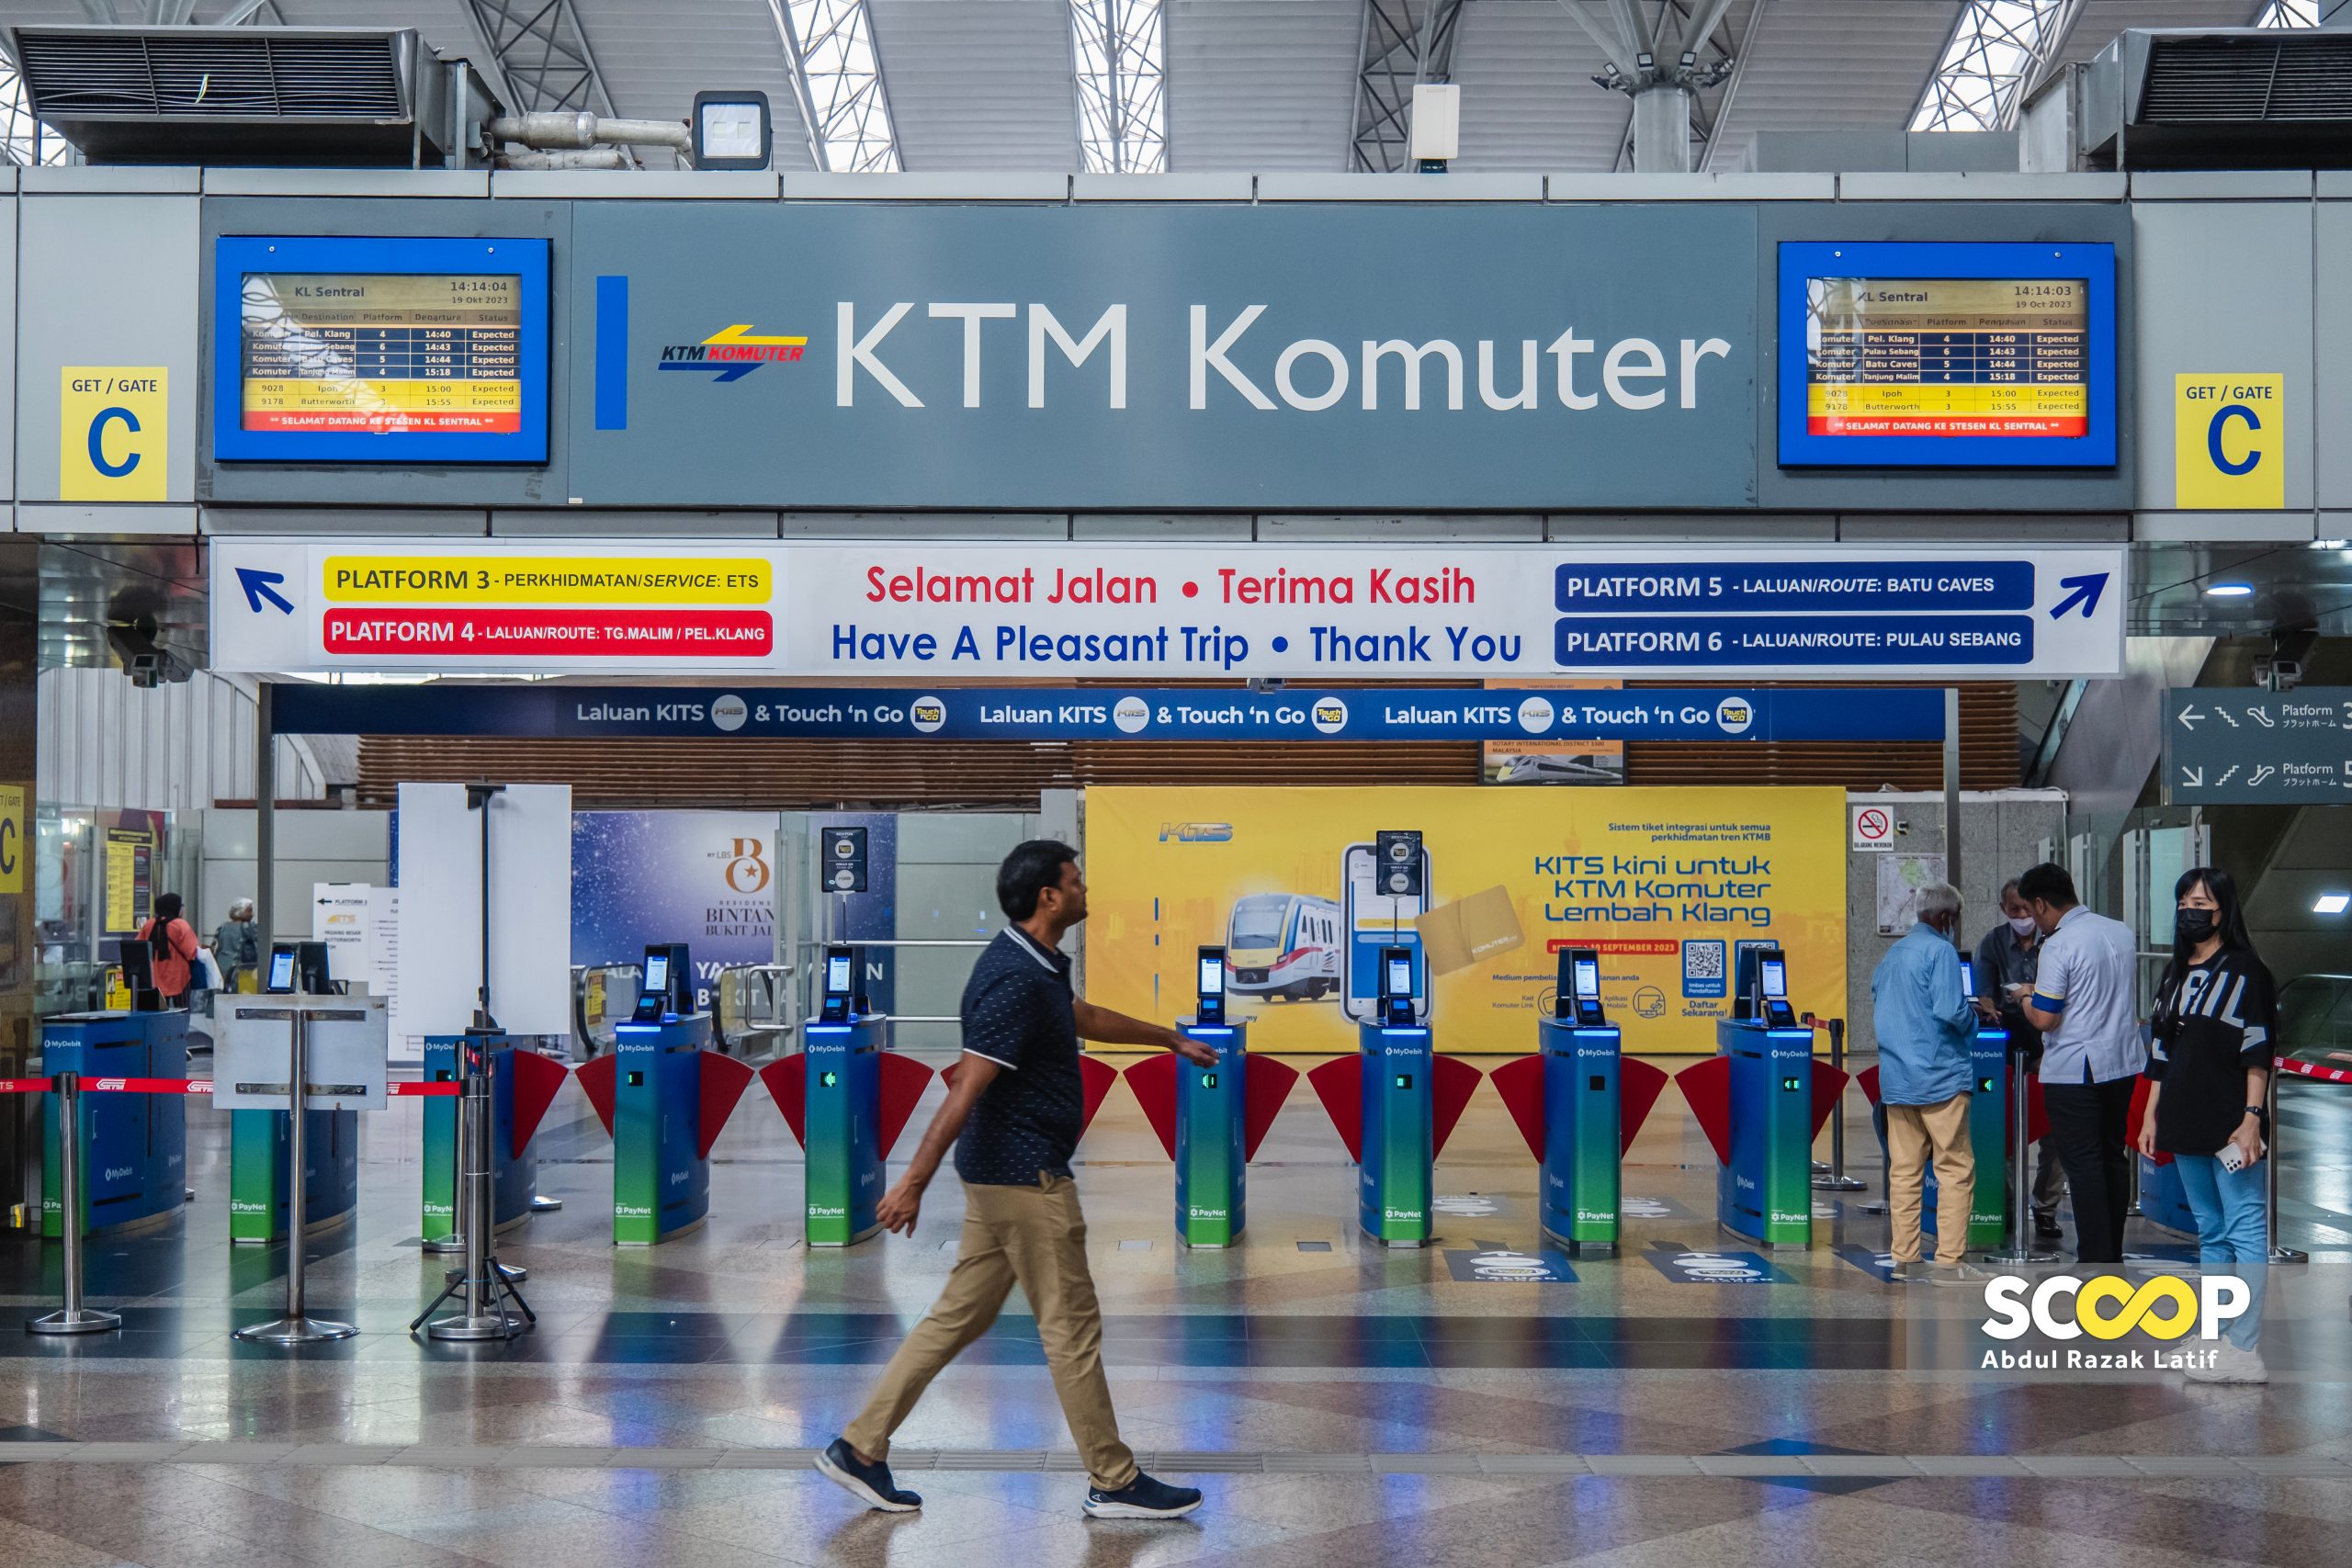 Komuter, ETS services restored following crane collapse: KTMB